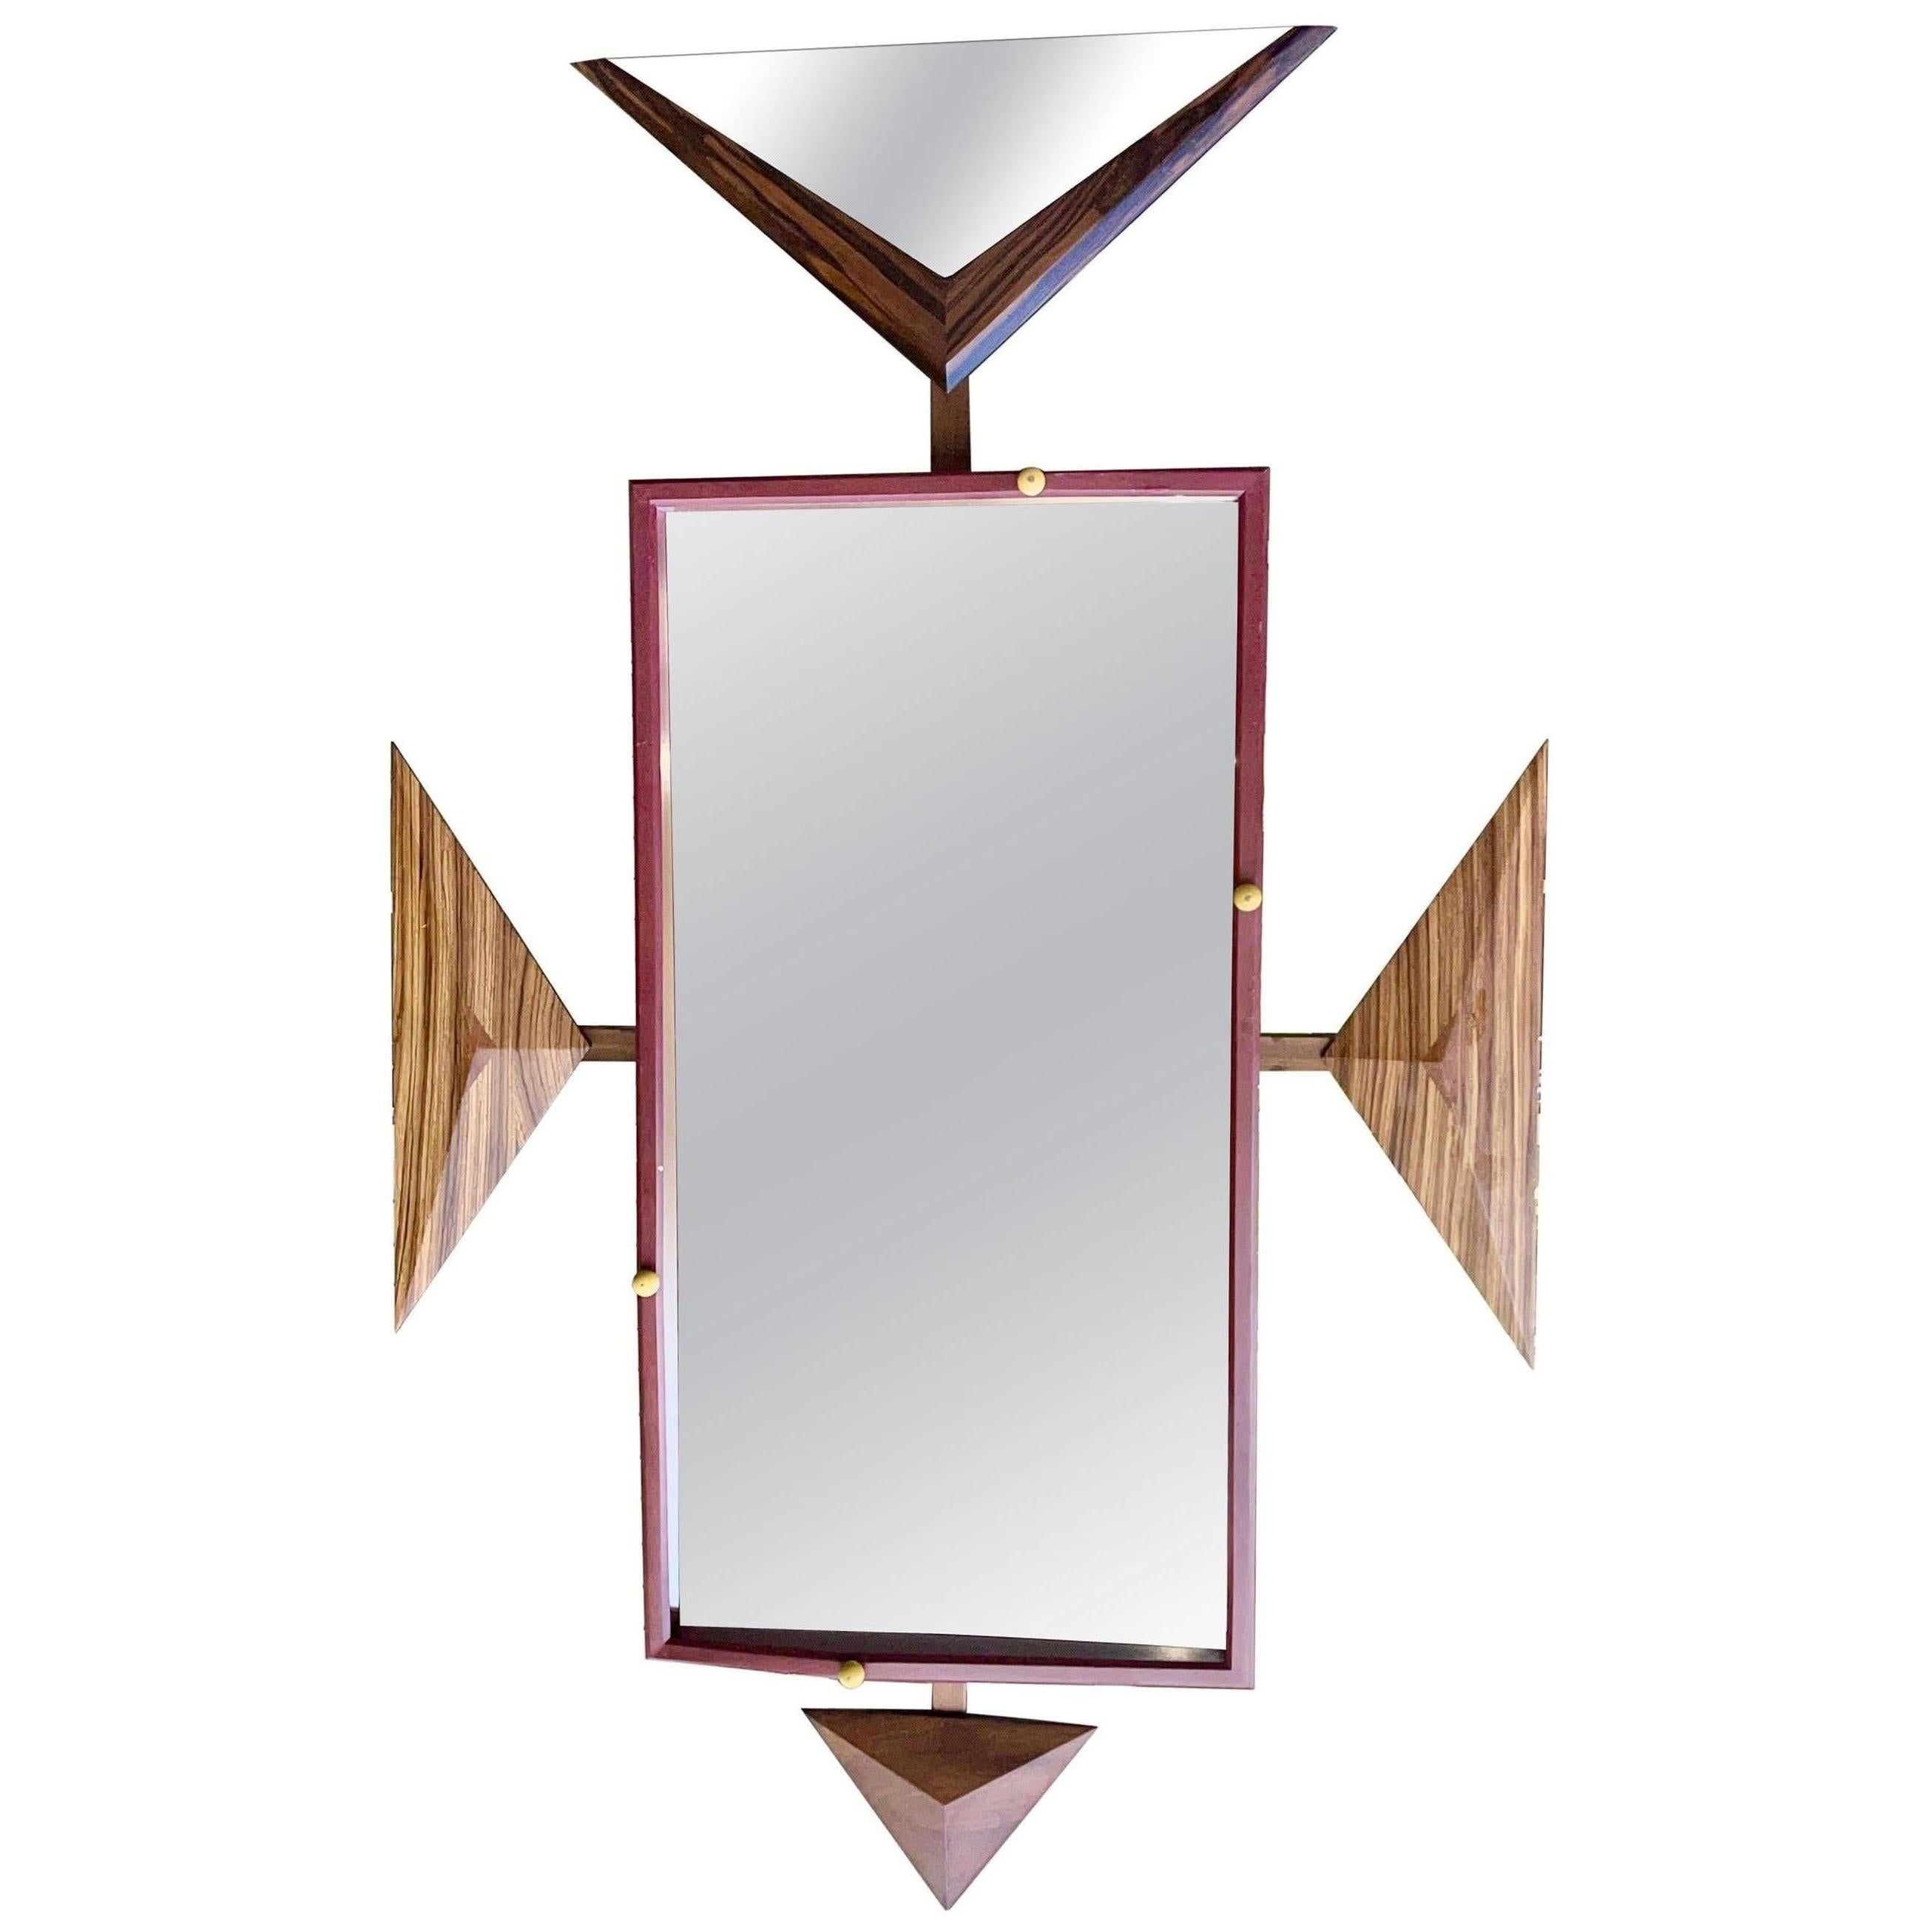 Alan S. Kushner Studio Craft Sculptural Wall Mirror For Sale